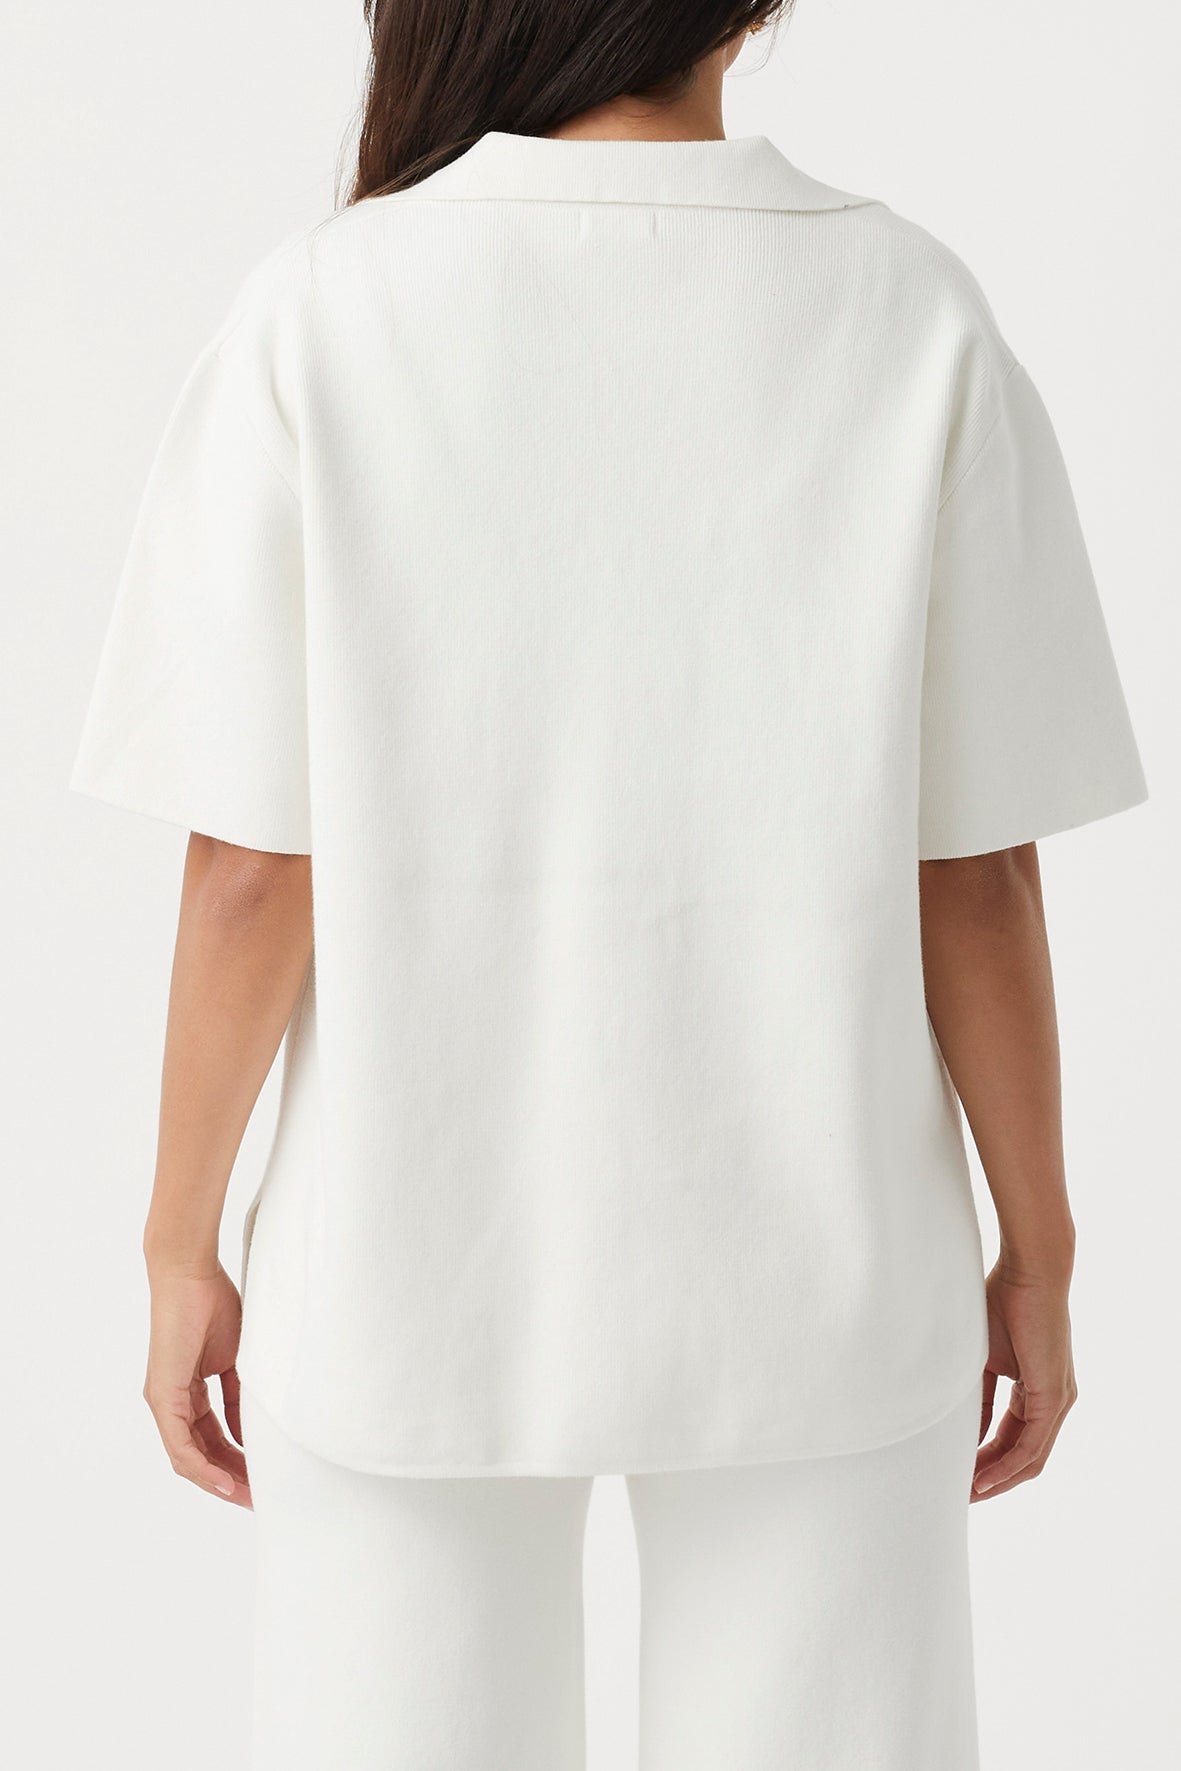 Easton Shirt // Cream